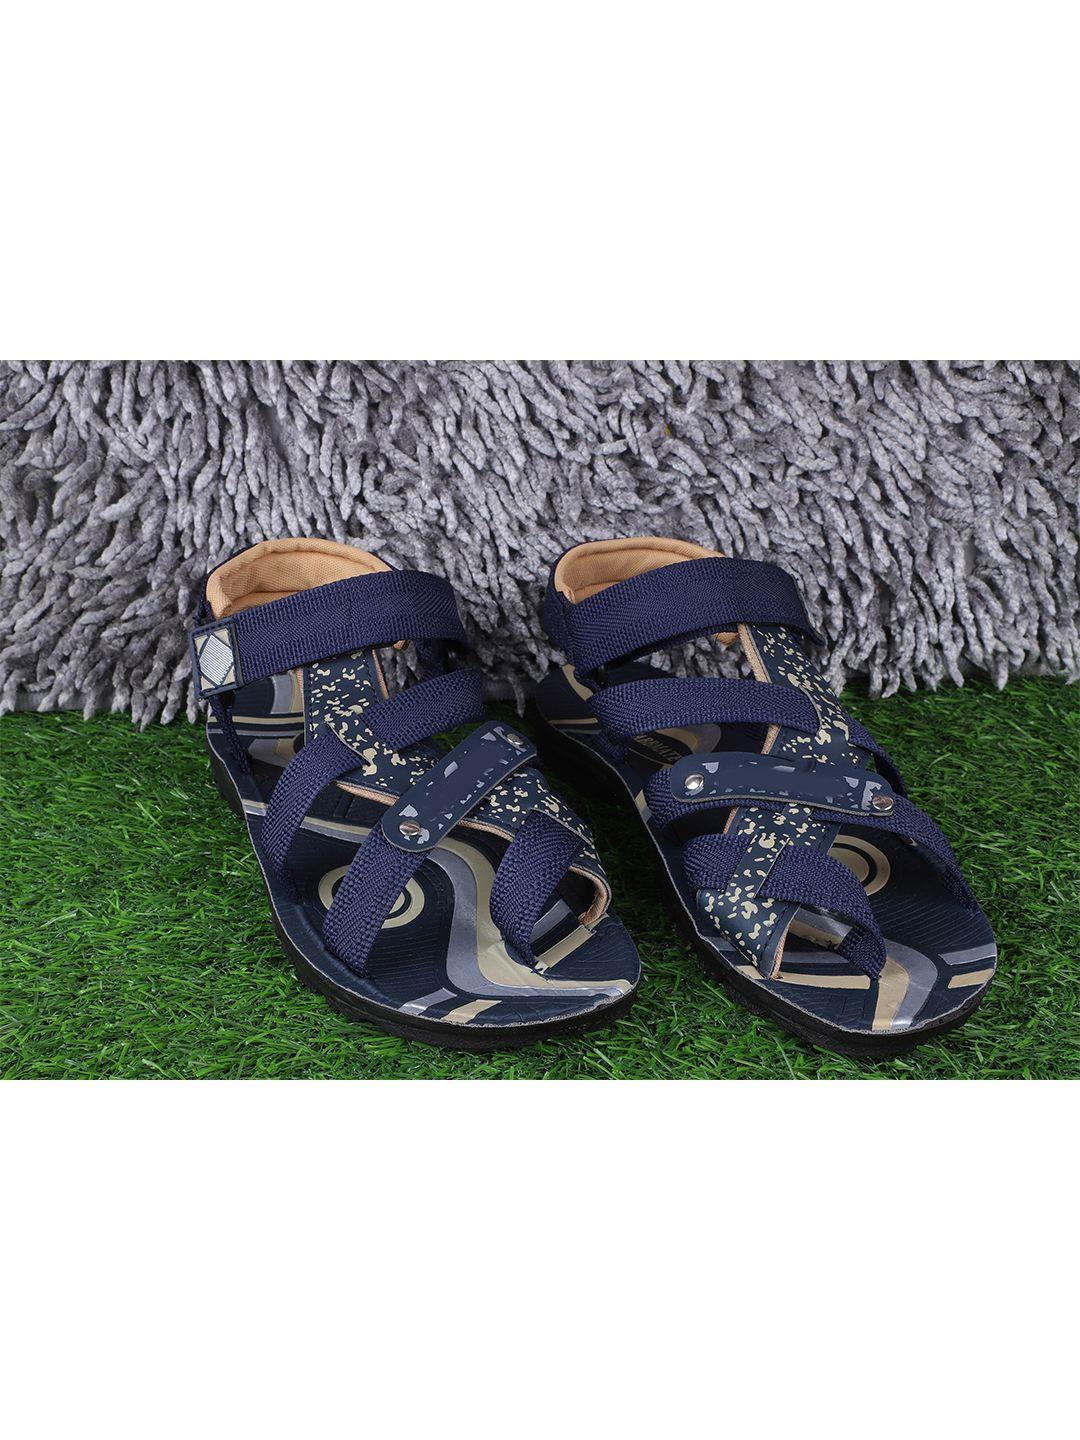 fabbmate-men-velcro-sports-sandals